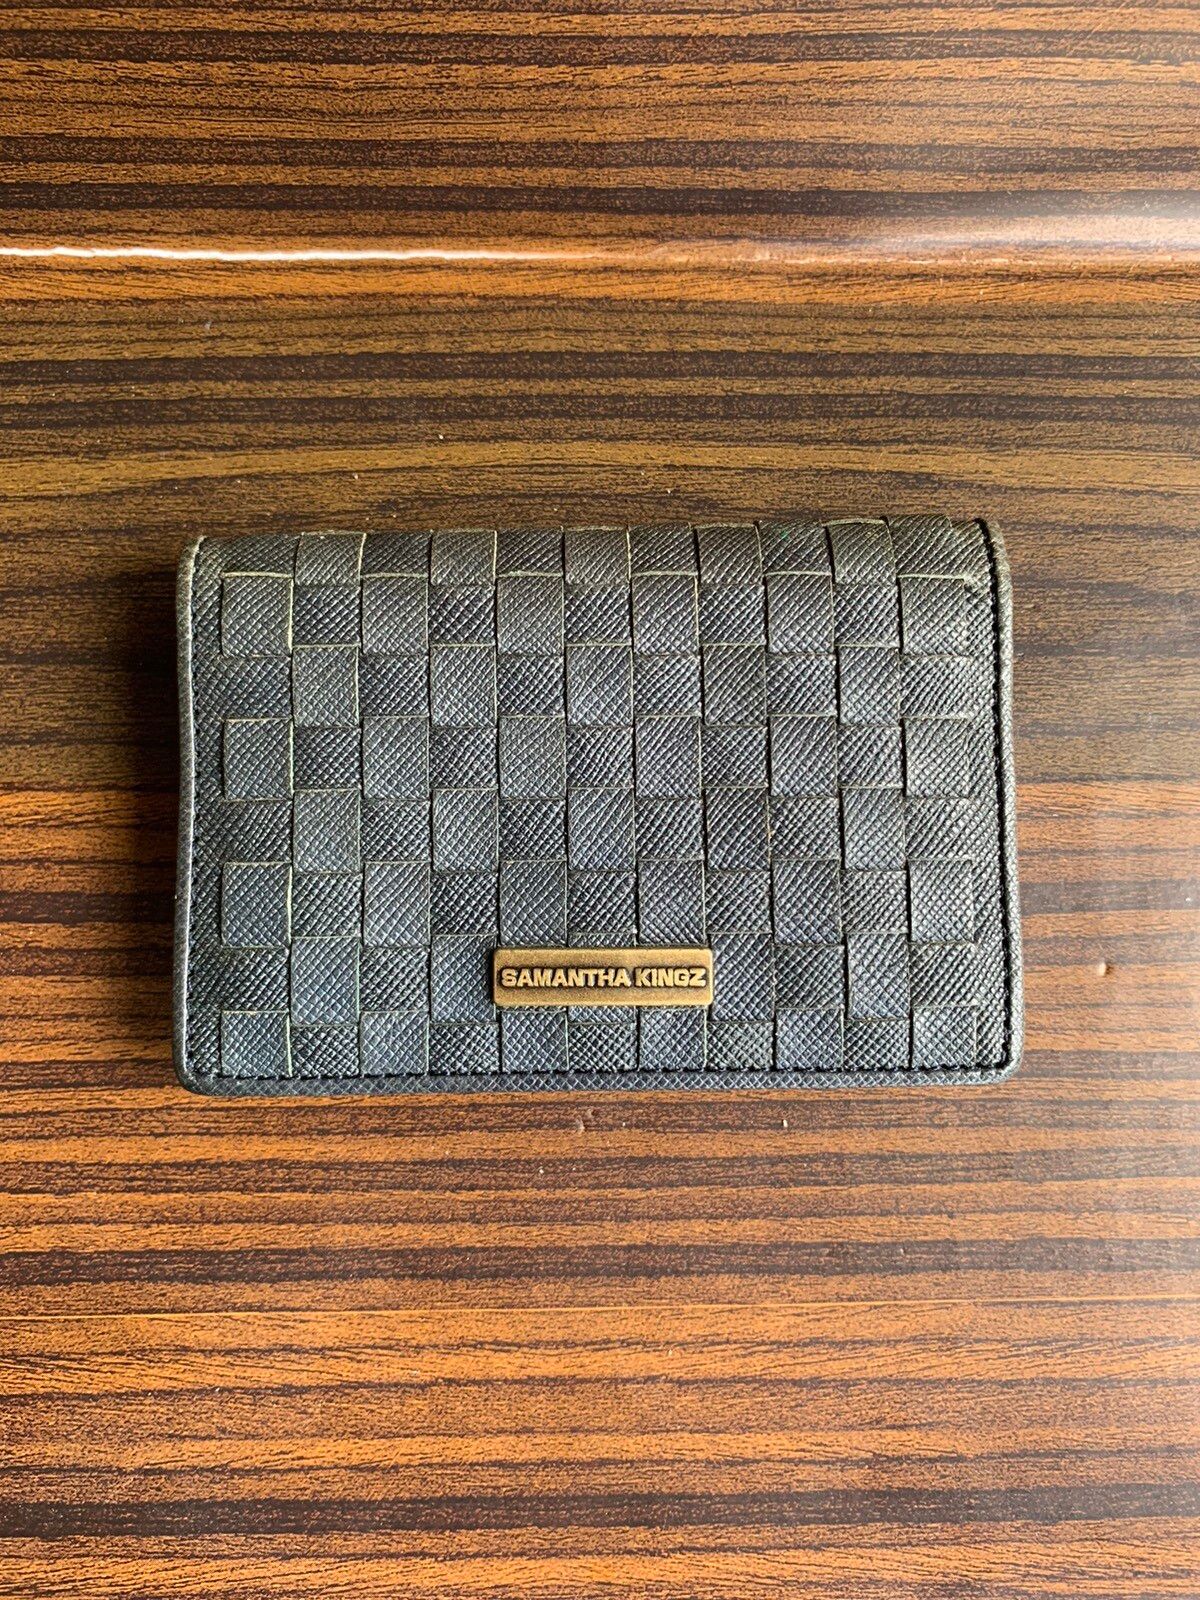 Vintage - Samantha kingz Leather Card Holder small Wallet Bottega styl - 1